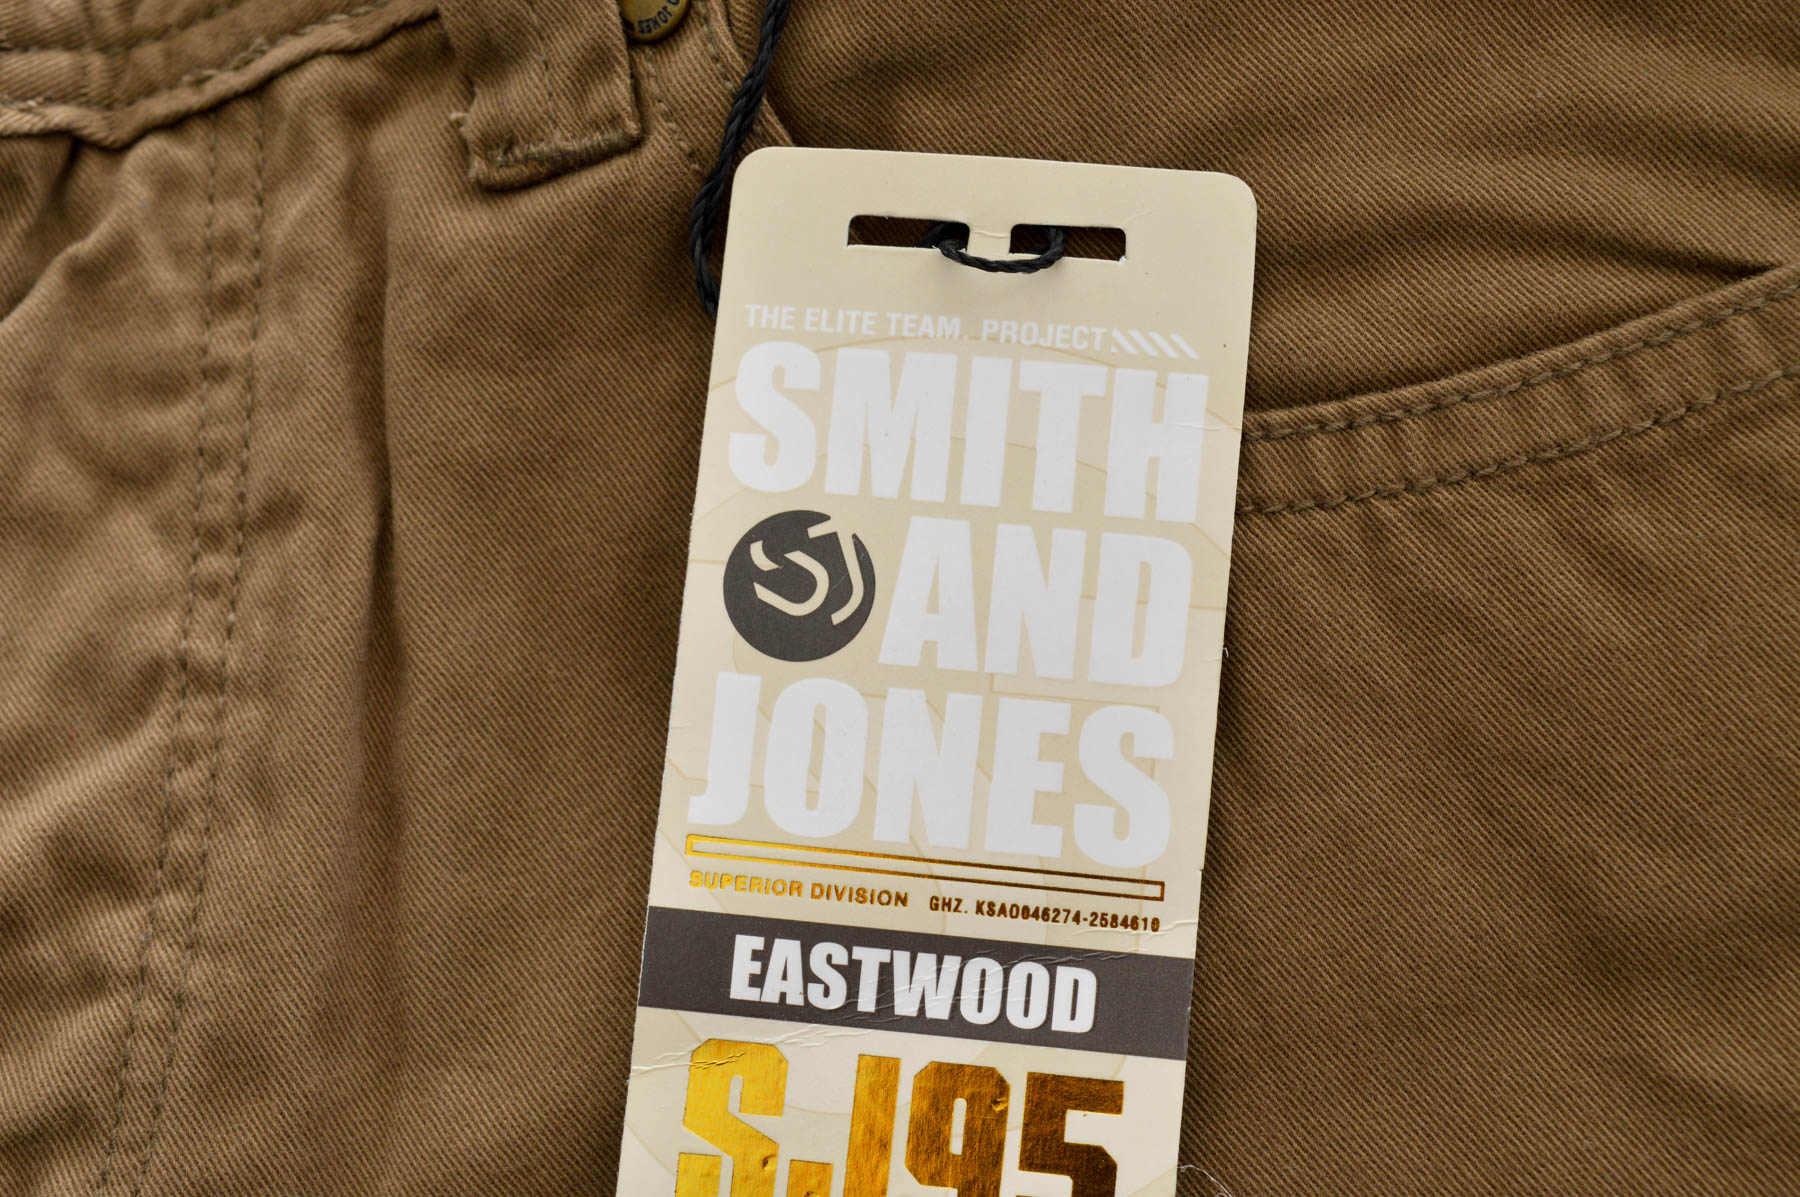 Men's trousers - Smith & Jones SJ95 - 2